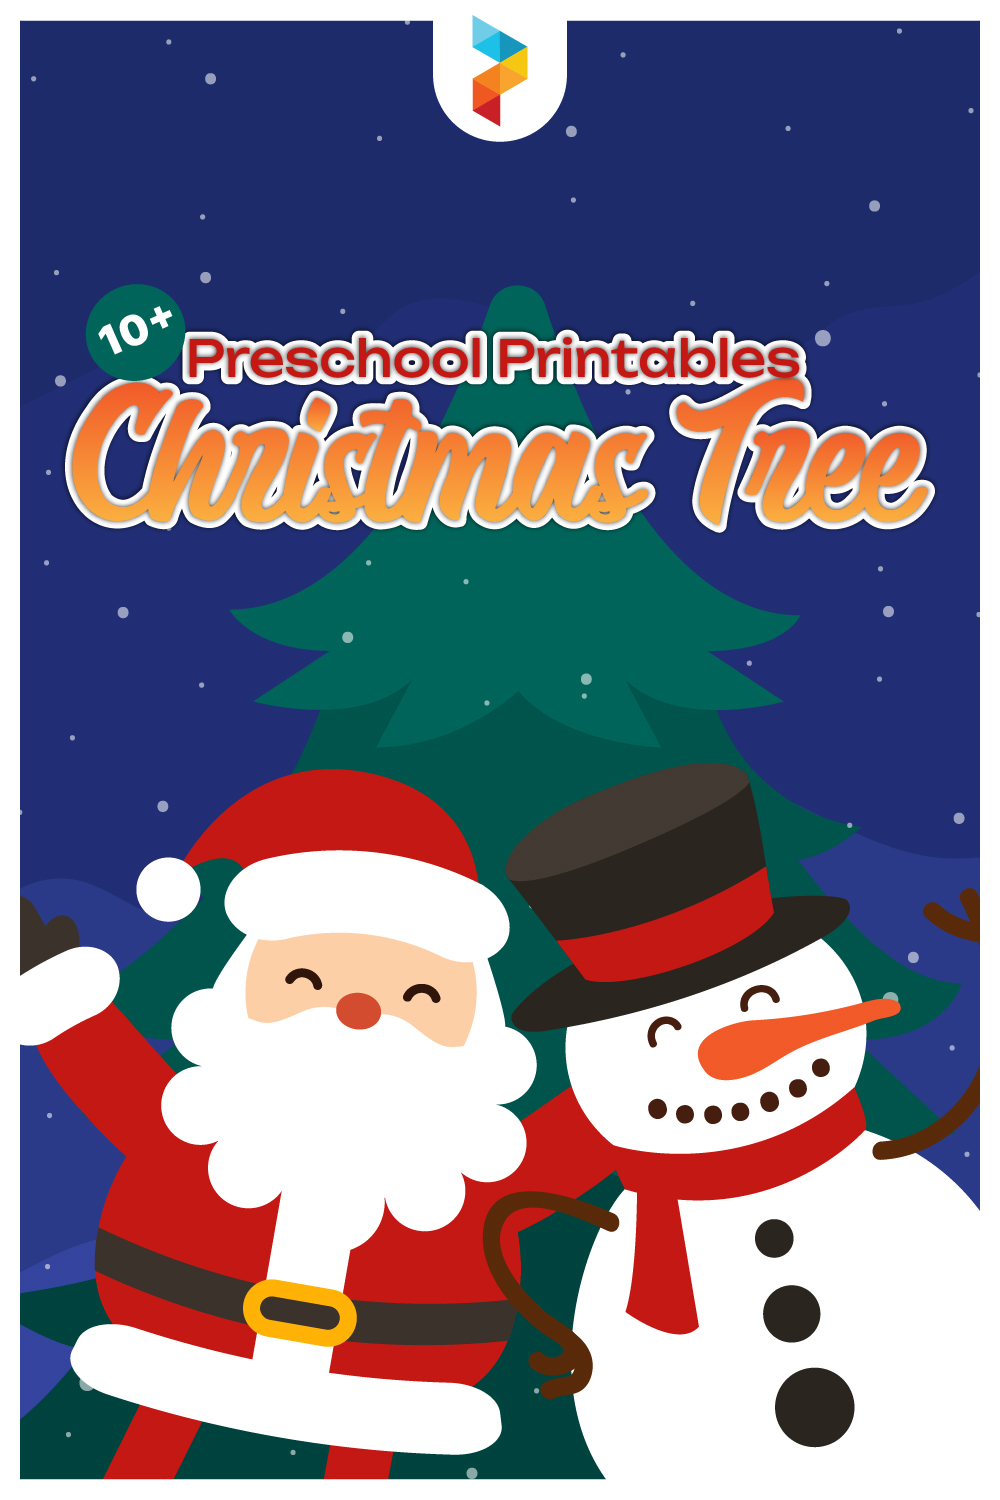 Preschool Printables Christmas Tree